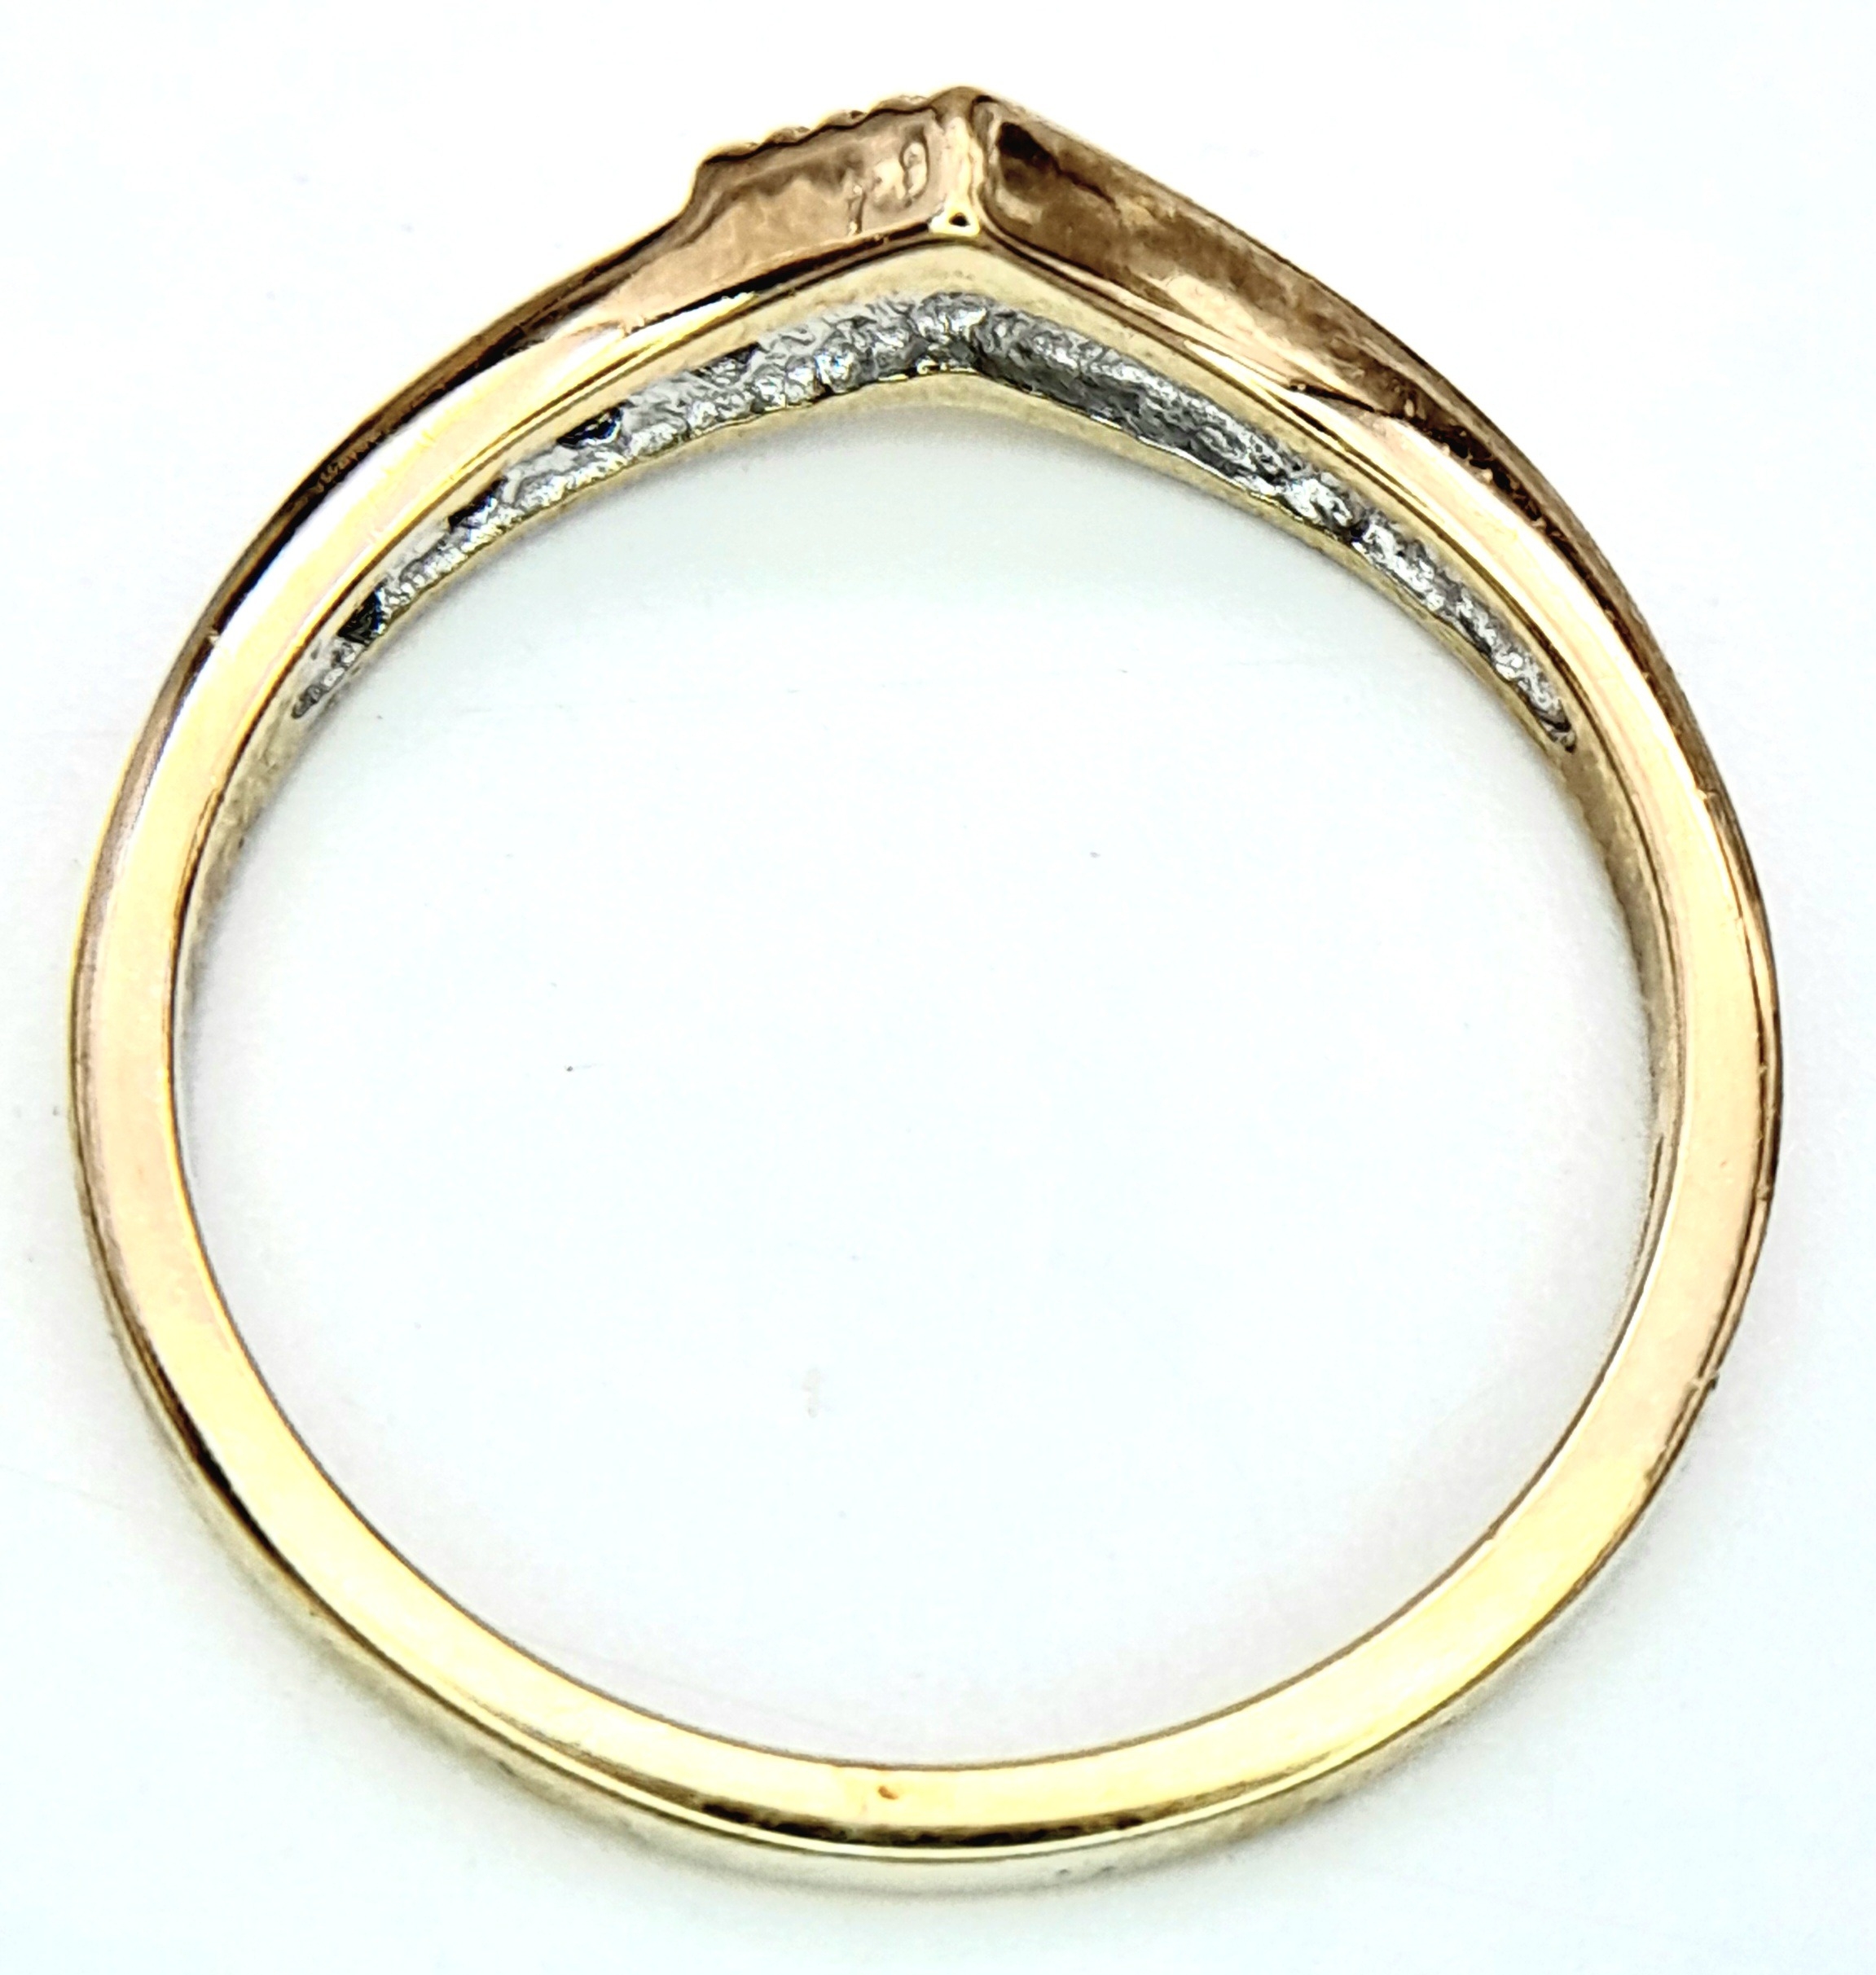 A 9K YELLOW GOLD DIAMOND AND SAPPHIRE SET WISHBONE RING. 2G. SIZE M. - Image 4 of 5